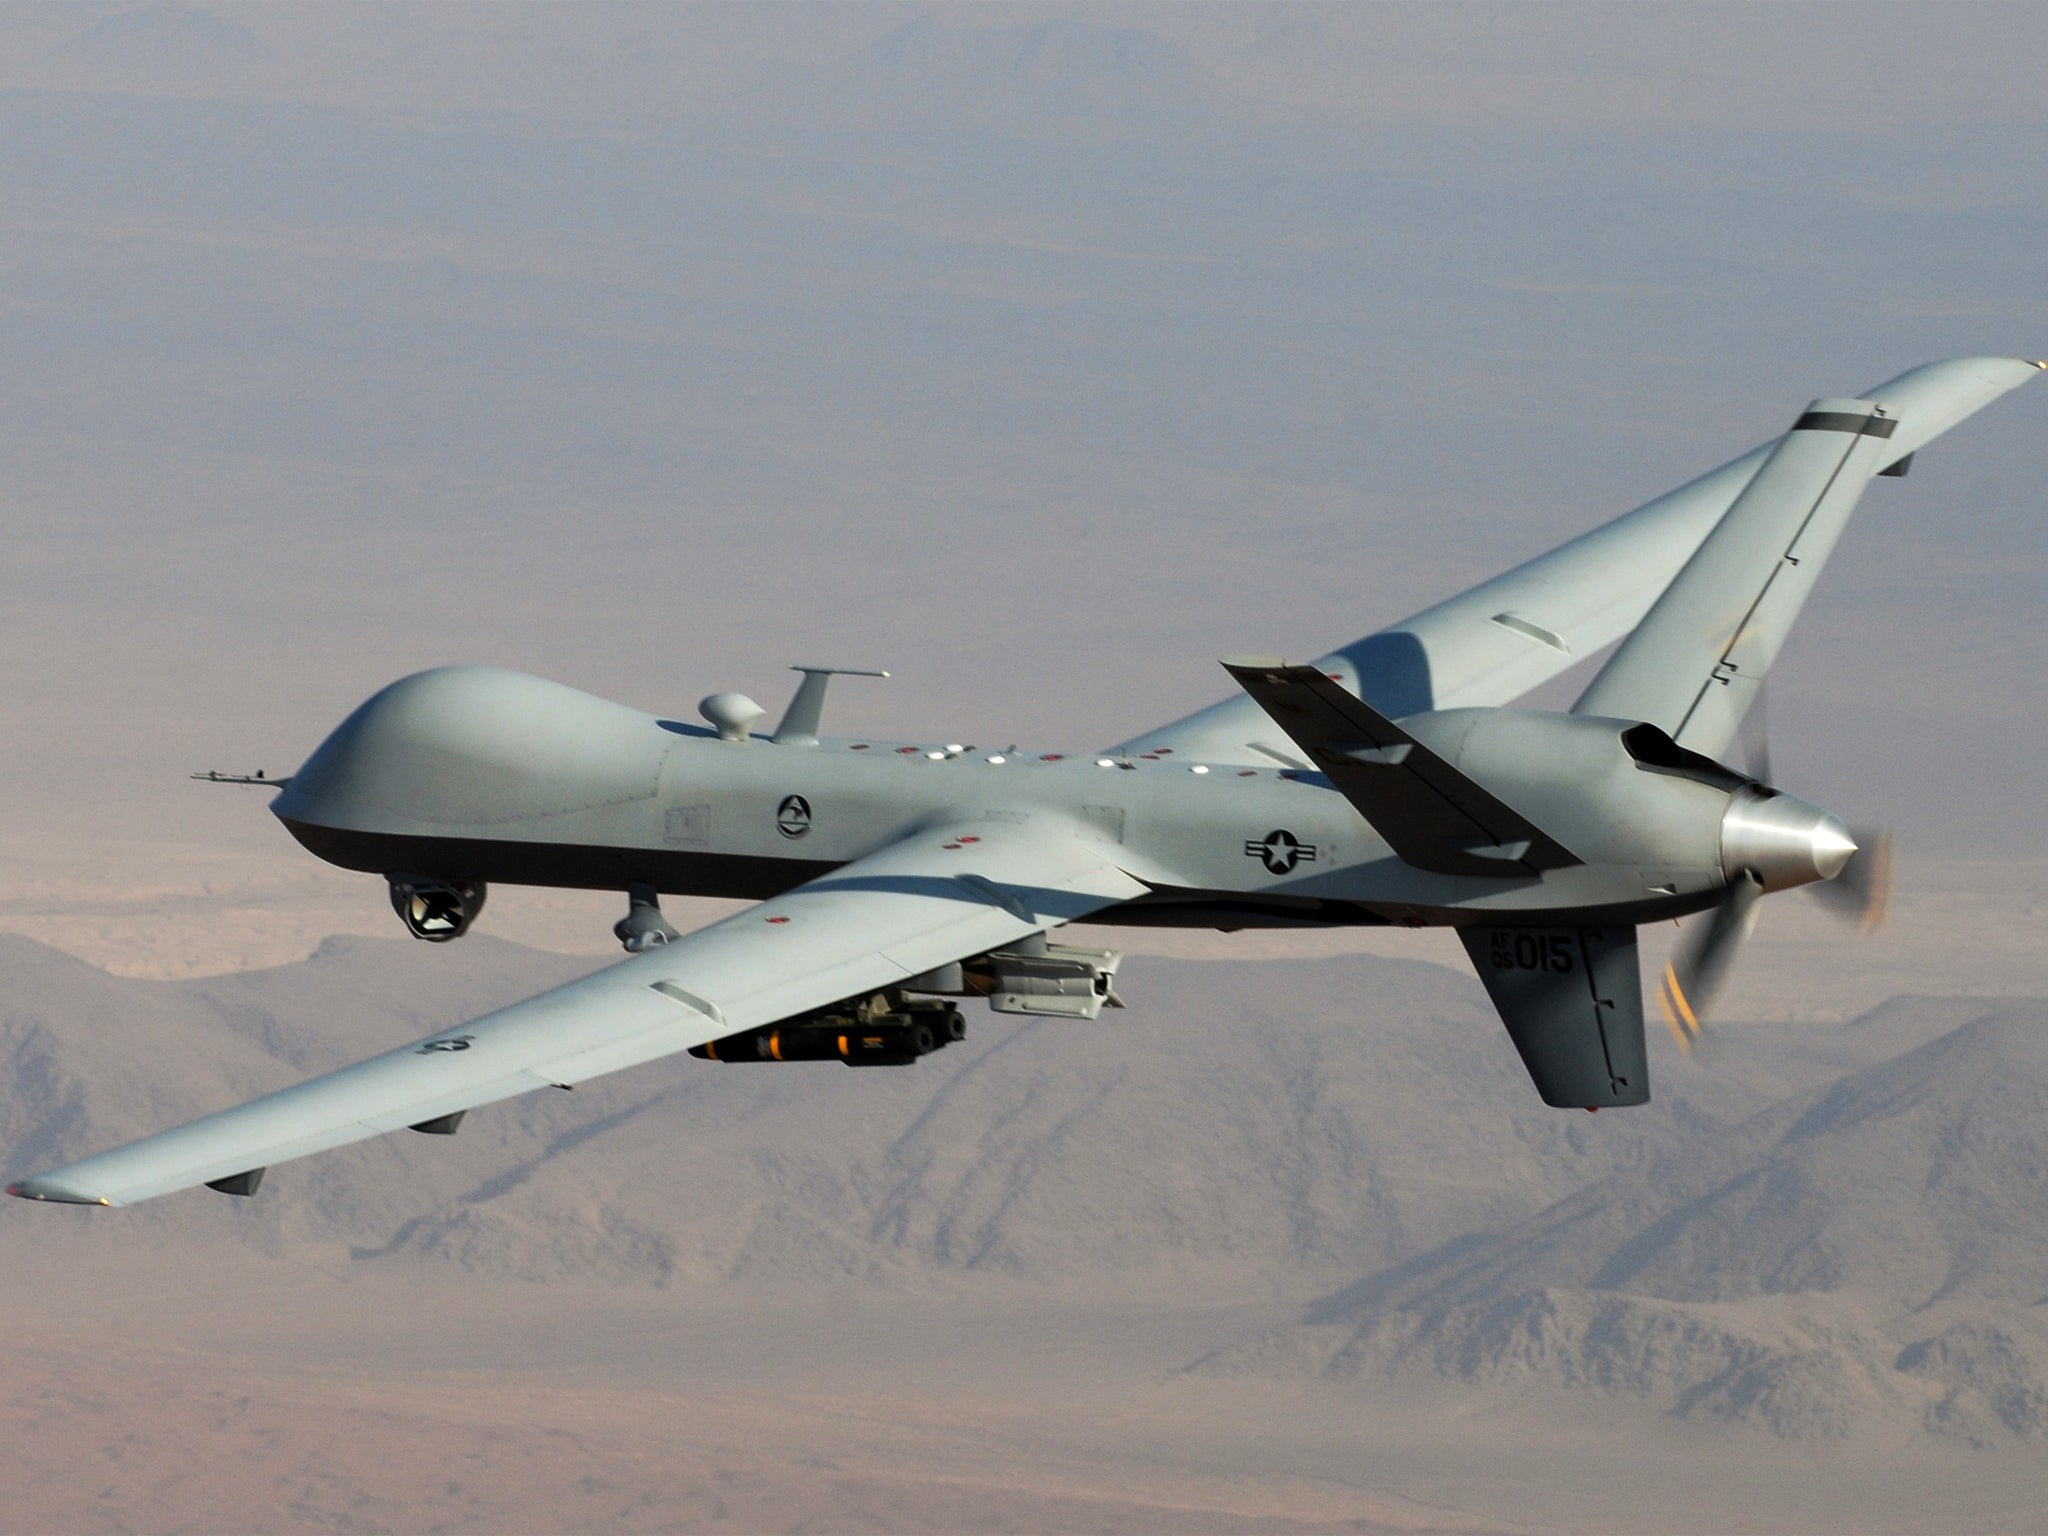 Pro and Con: International Drone Strikes